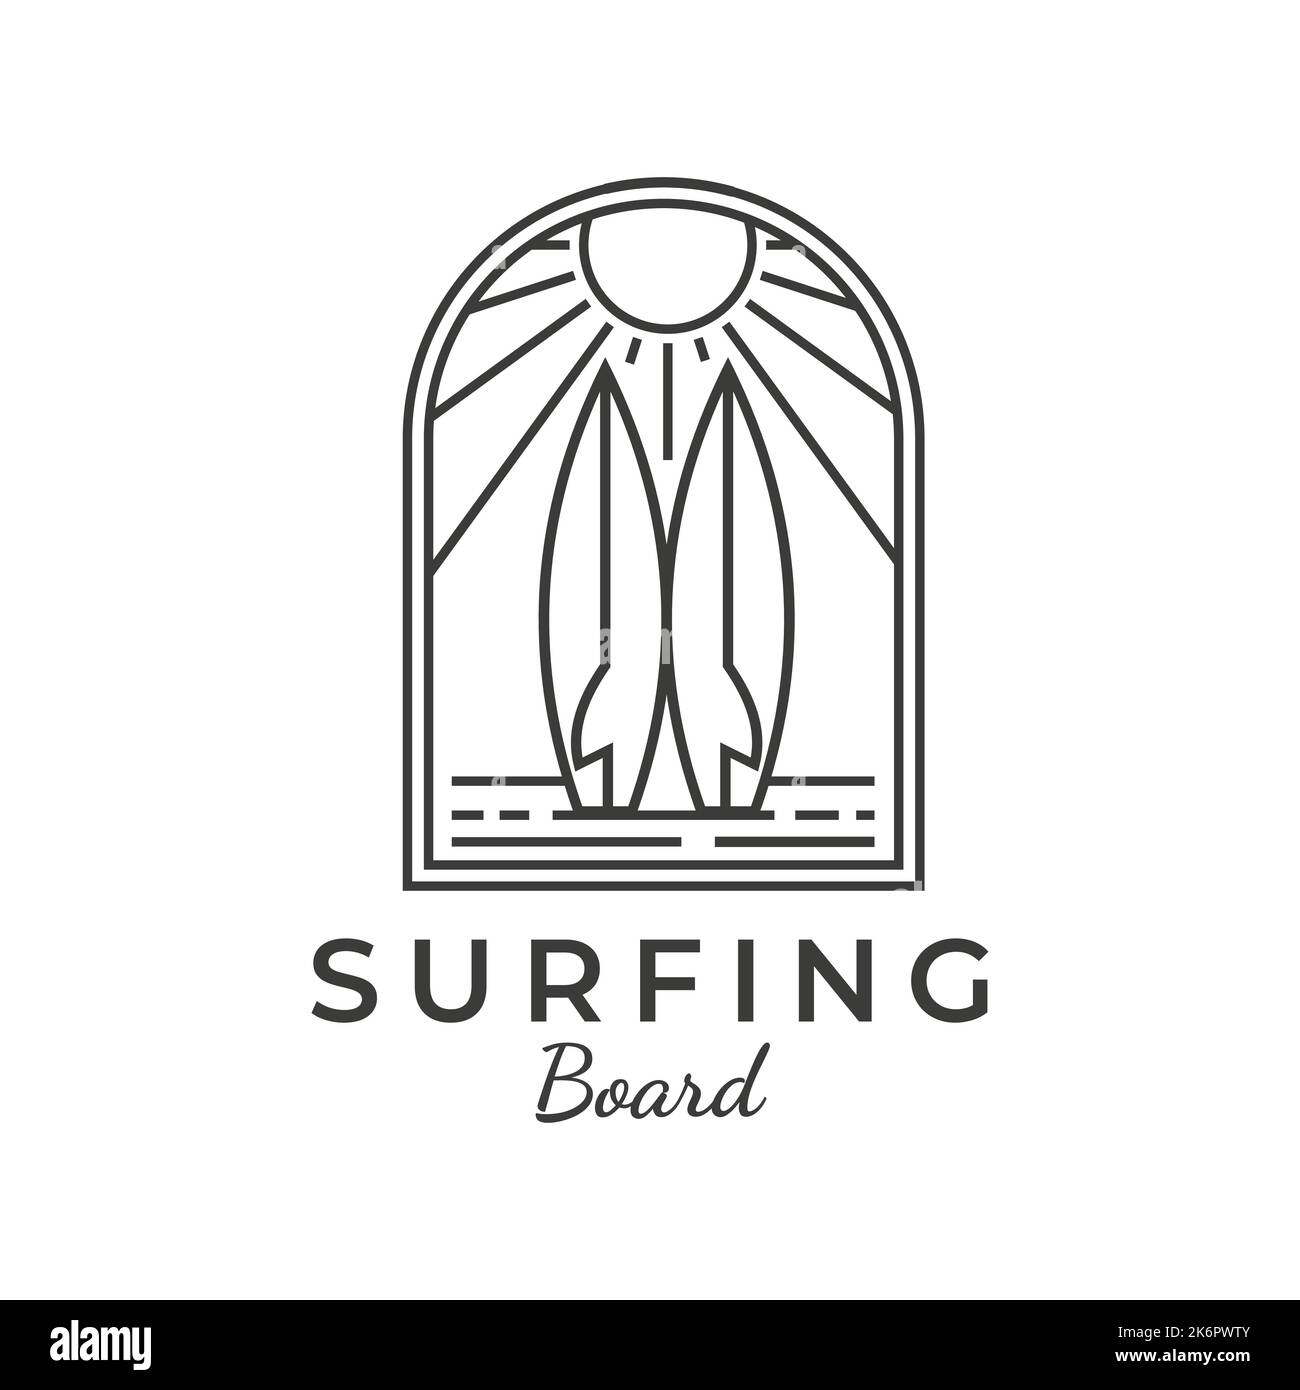 Two surfboard line art logo vector illustration design, sea, beach, icon, symbol Stock Vector